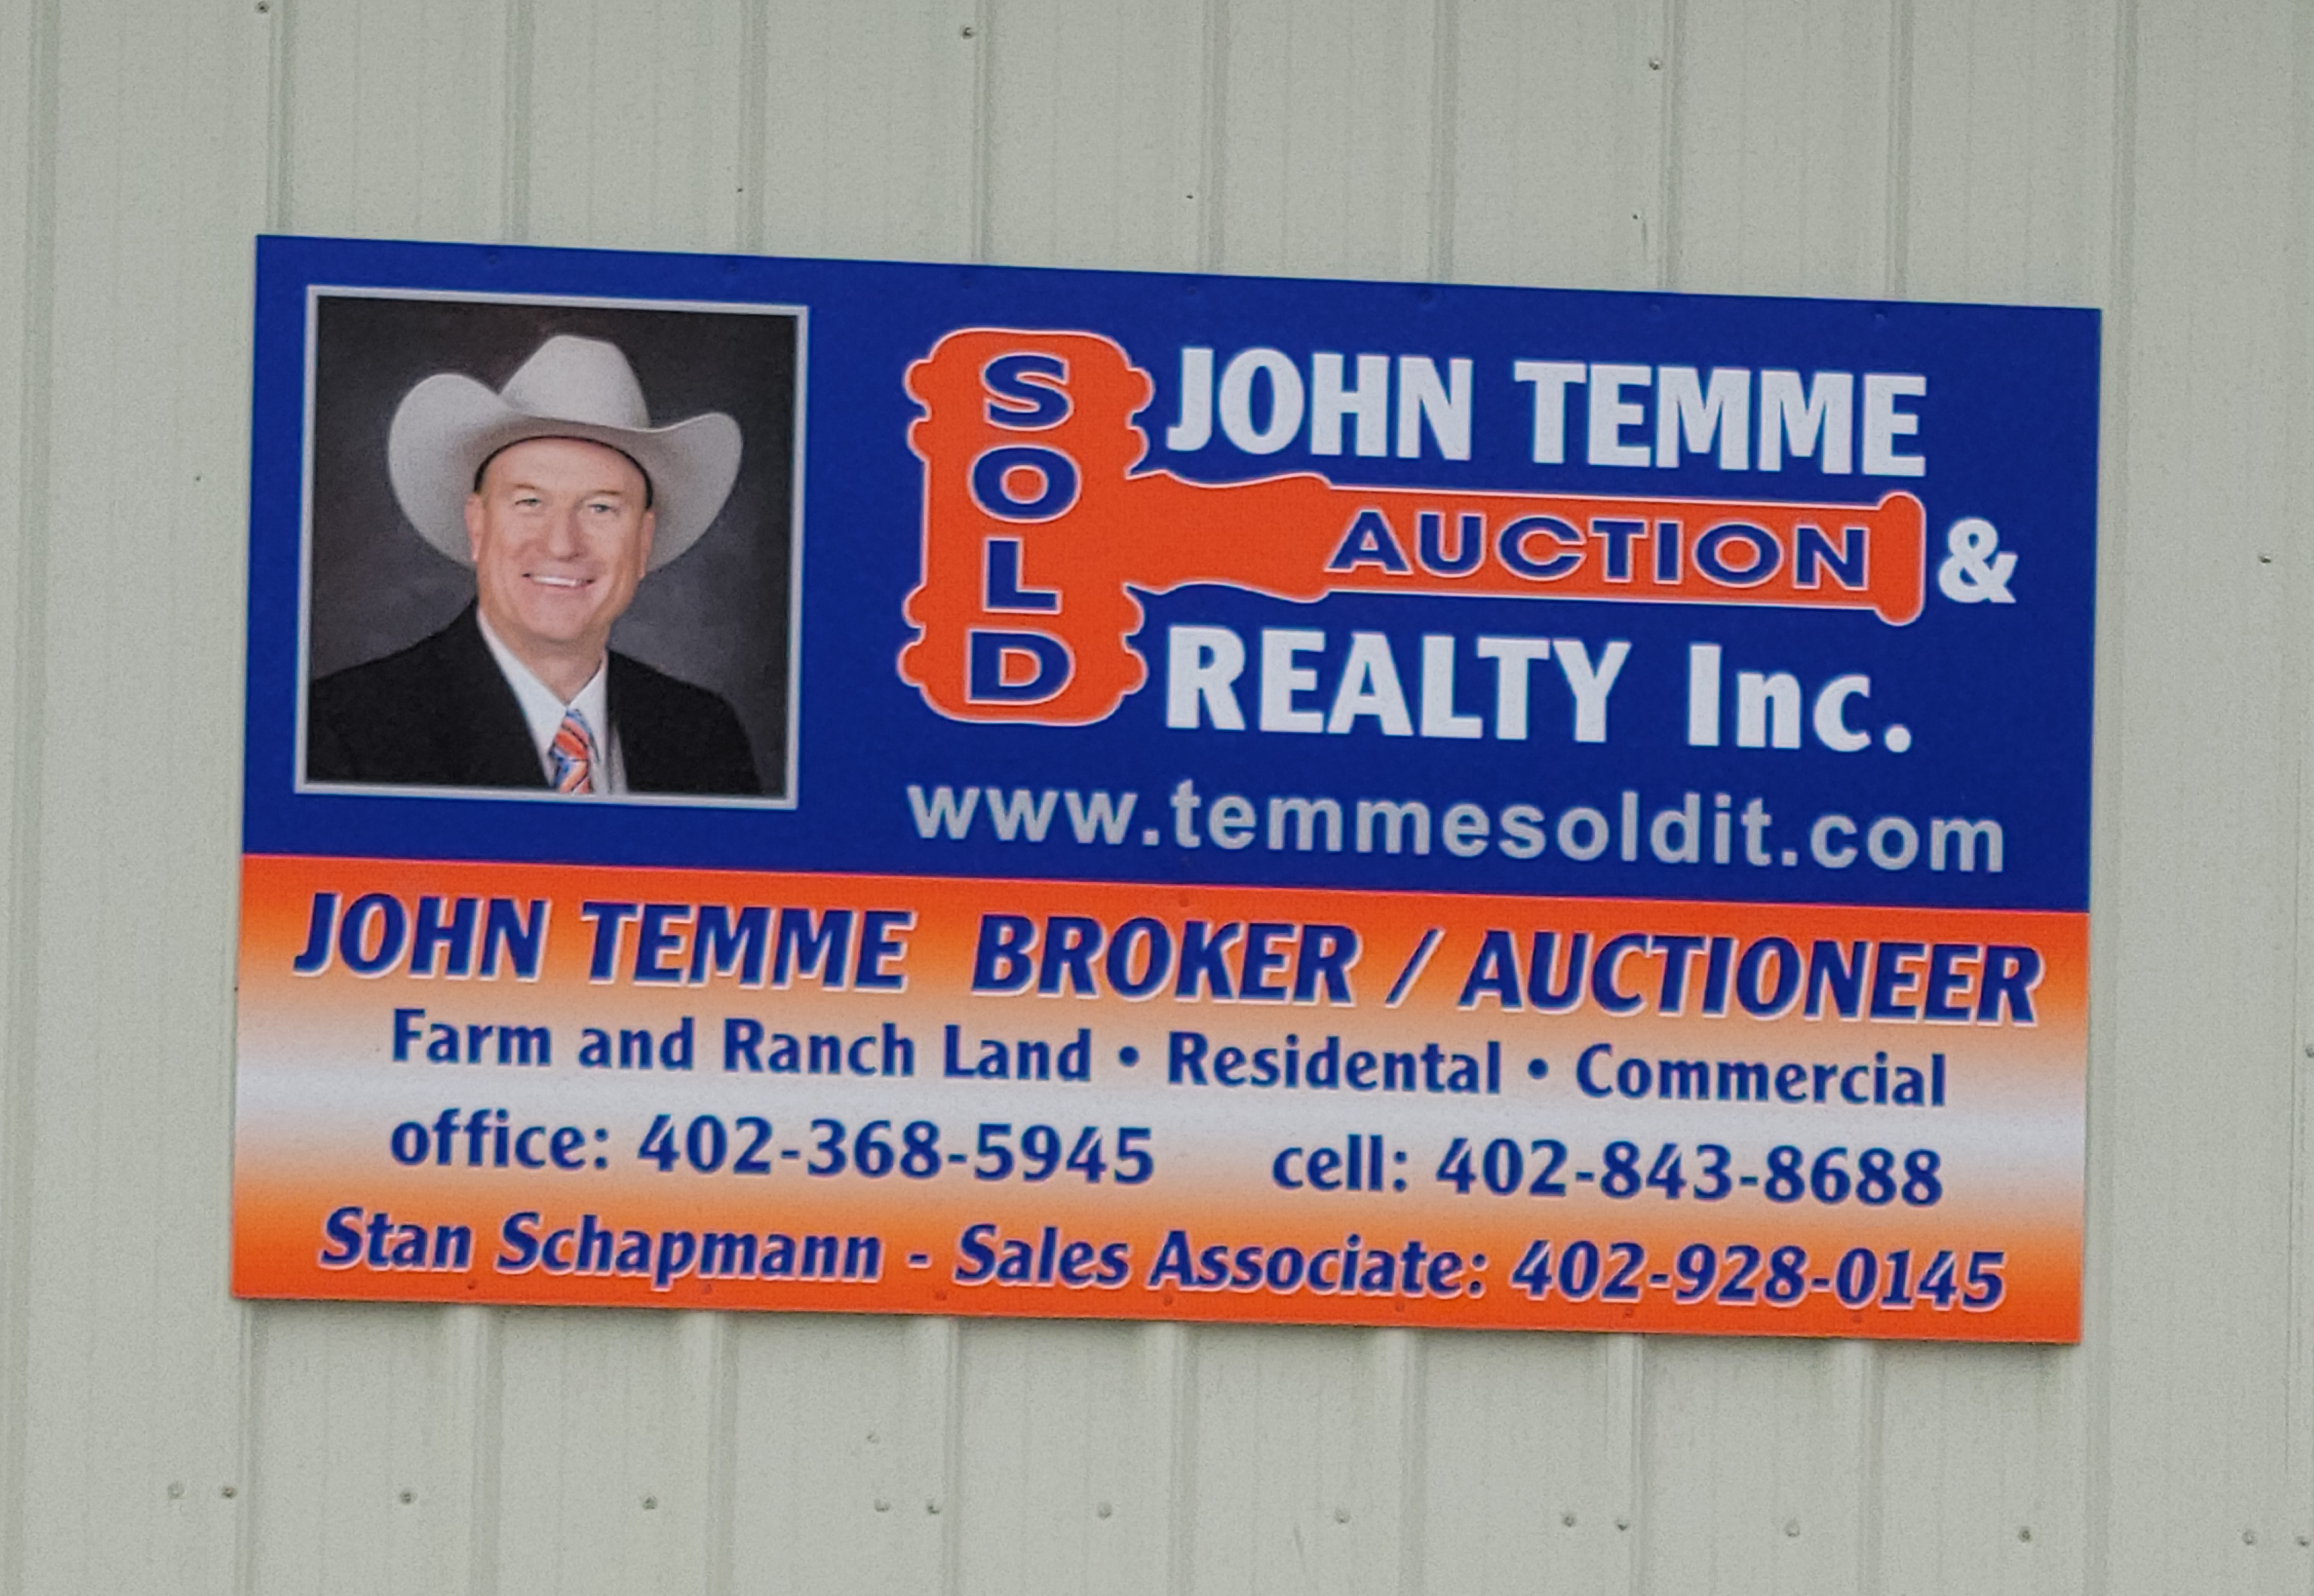 John Temme Auction & Real Estate - Stan Schapmann featured business photo